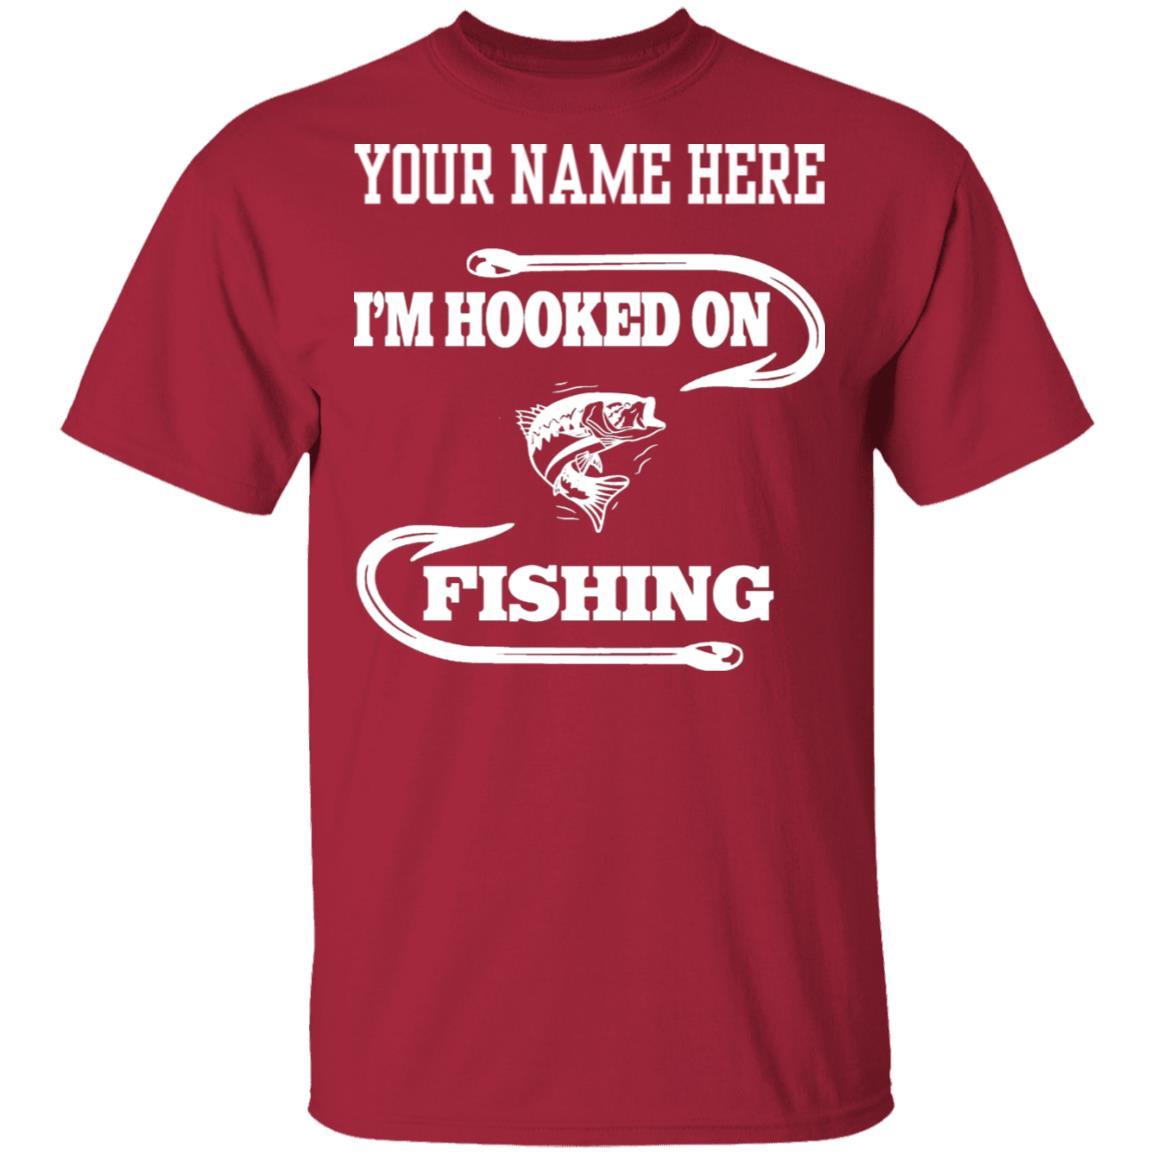 I'm hooked on fishing t-shirt w cardinal